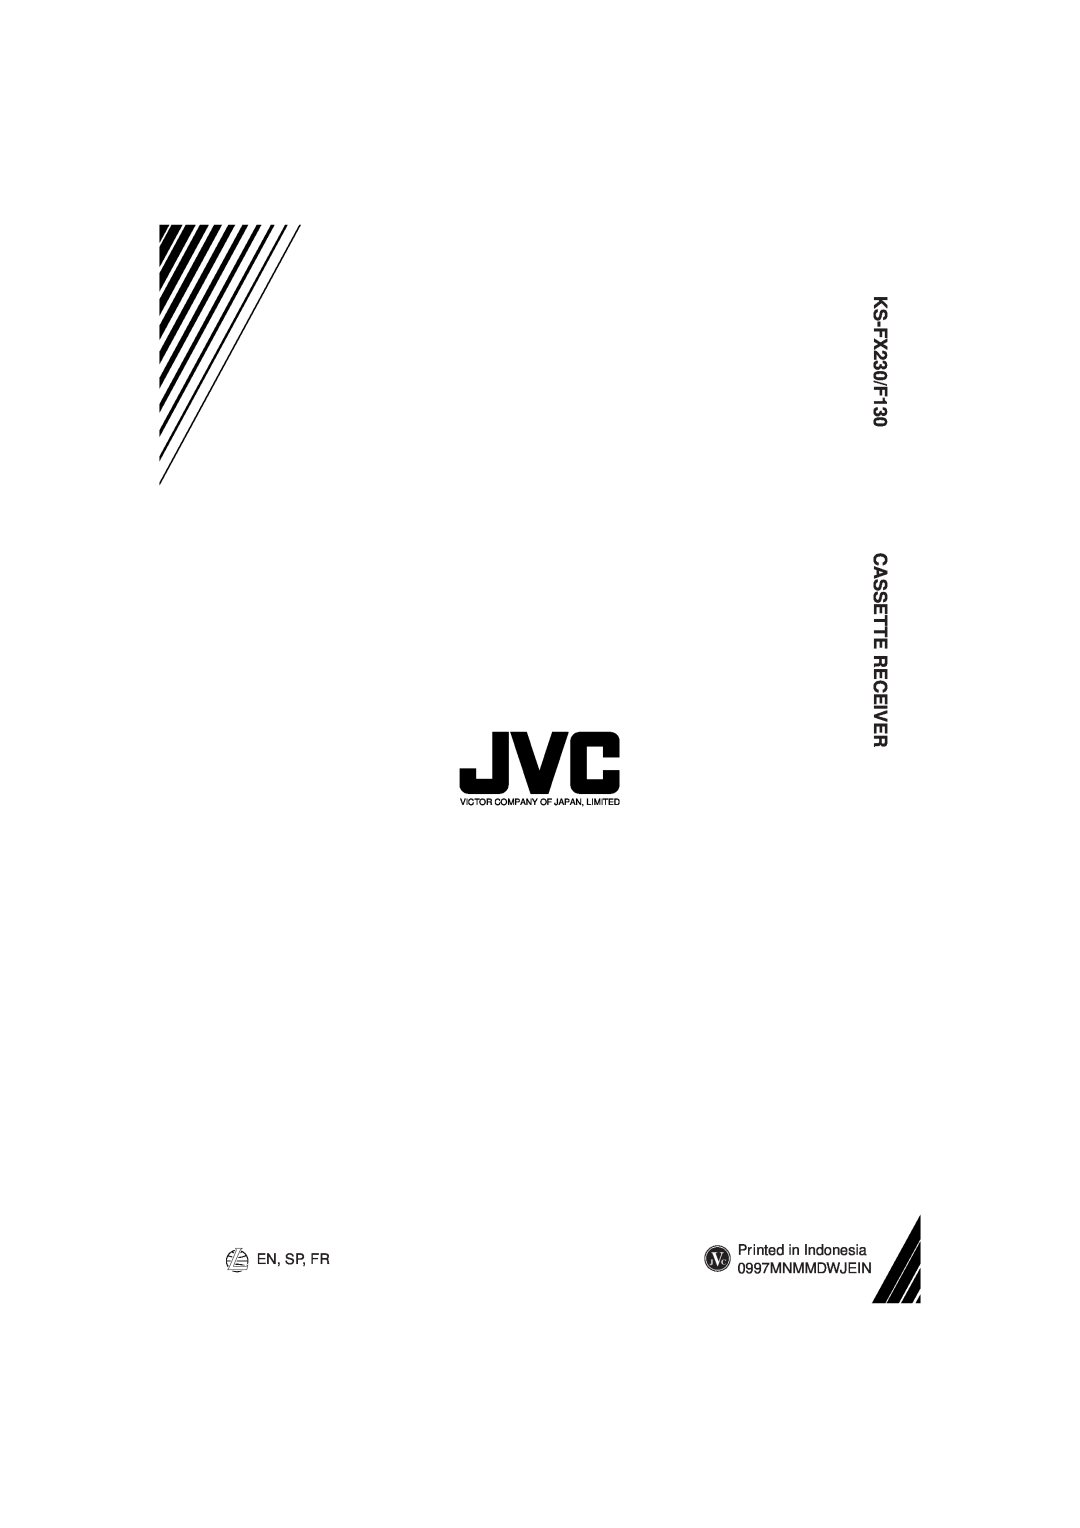 JVC manual KS-FX230/F130 CASSETTE RECEIVER, En, Sp, Fr, 0997MNMMDWJEIN, Victor Company Of Japan, Limited 